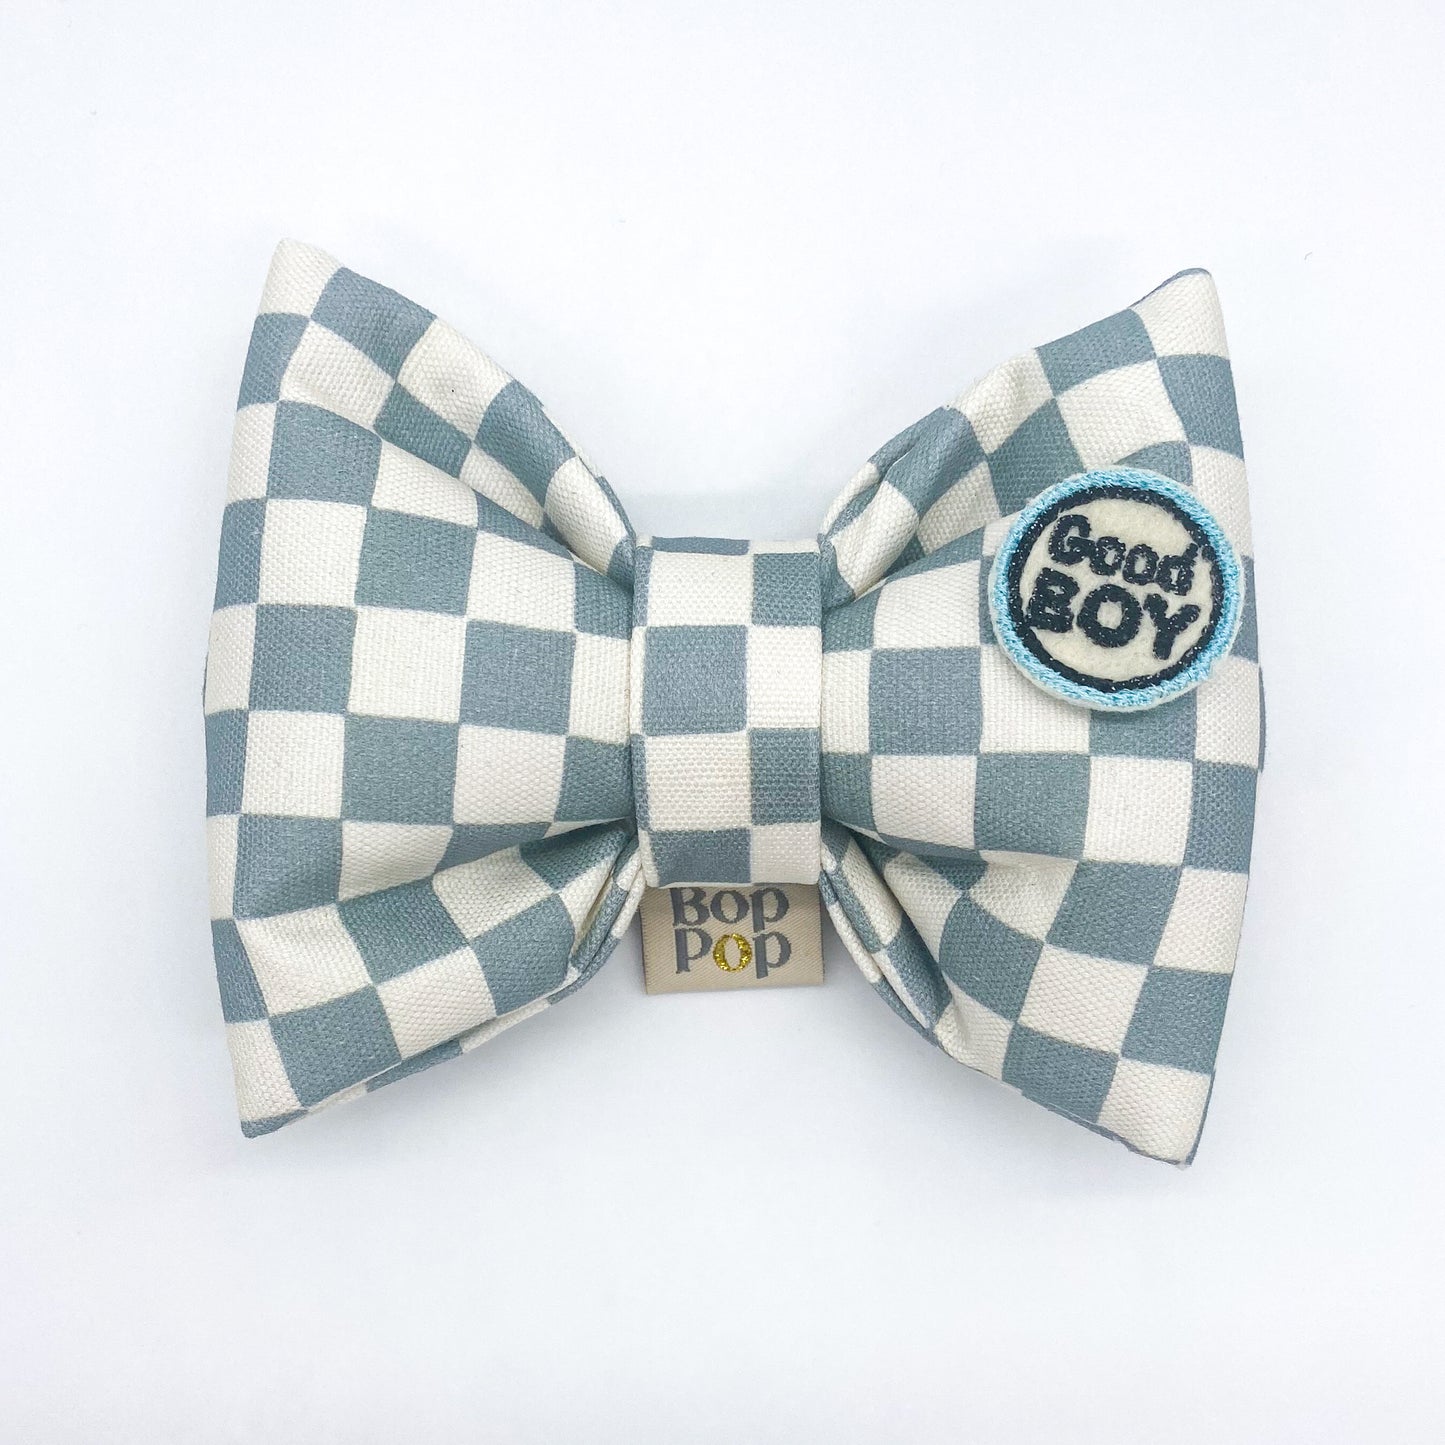 blue stone checkerboard xxl dog cat pet bow tie BIG PUPPA  pet apparel with custom patch Good Boy Bop Pop Pets